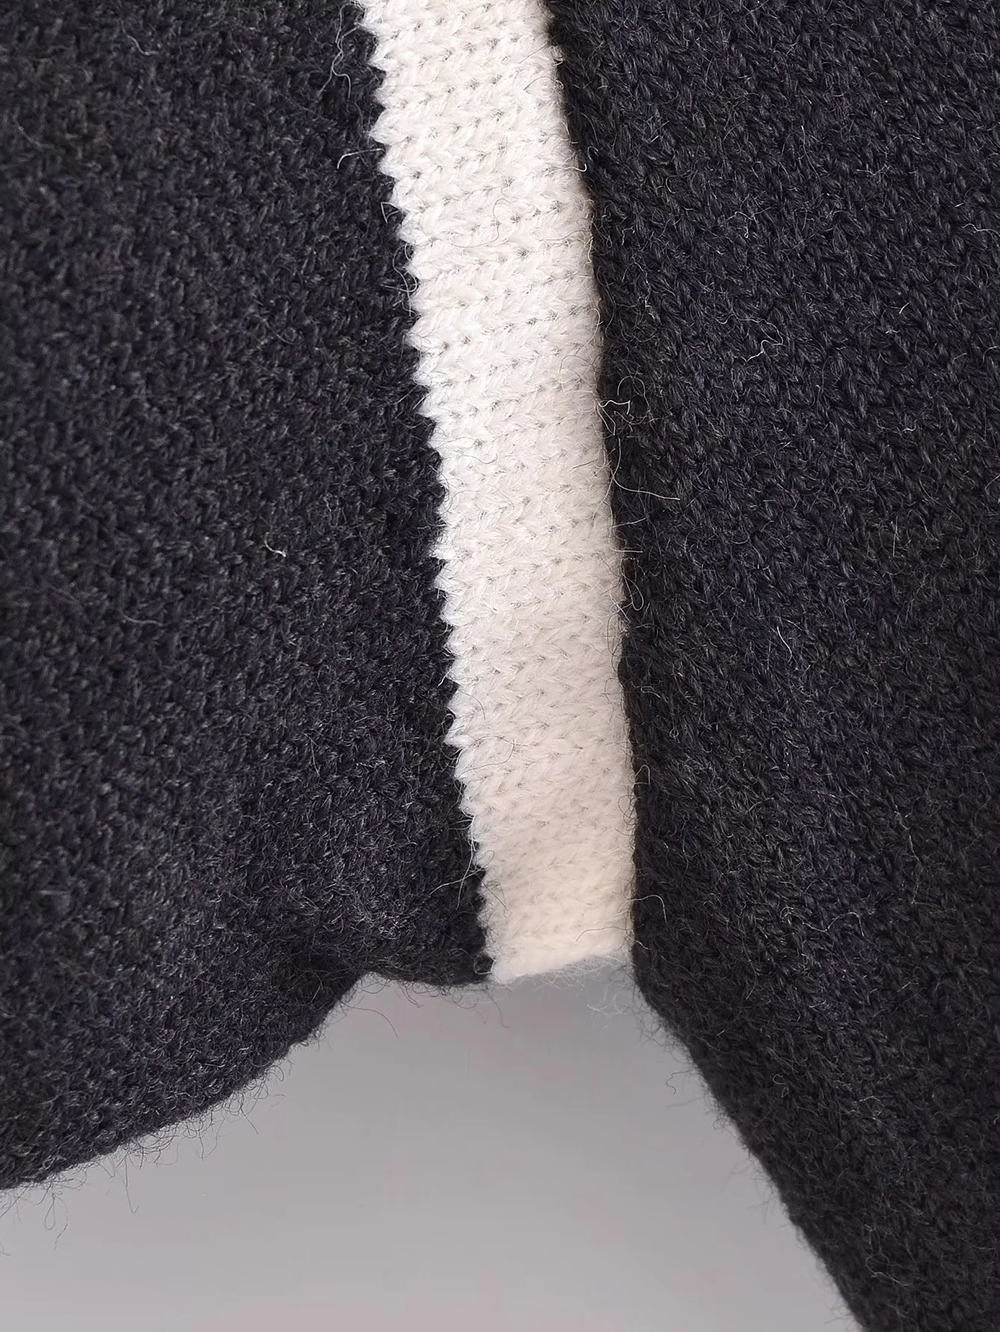 Fashion Black Black And White Striped V-neck Cardigan,Sweater